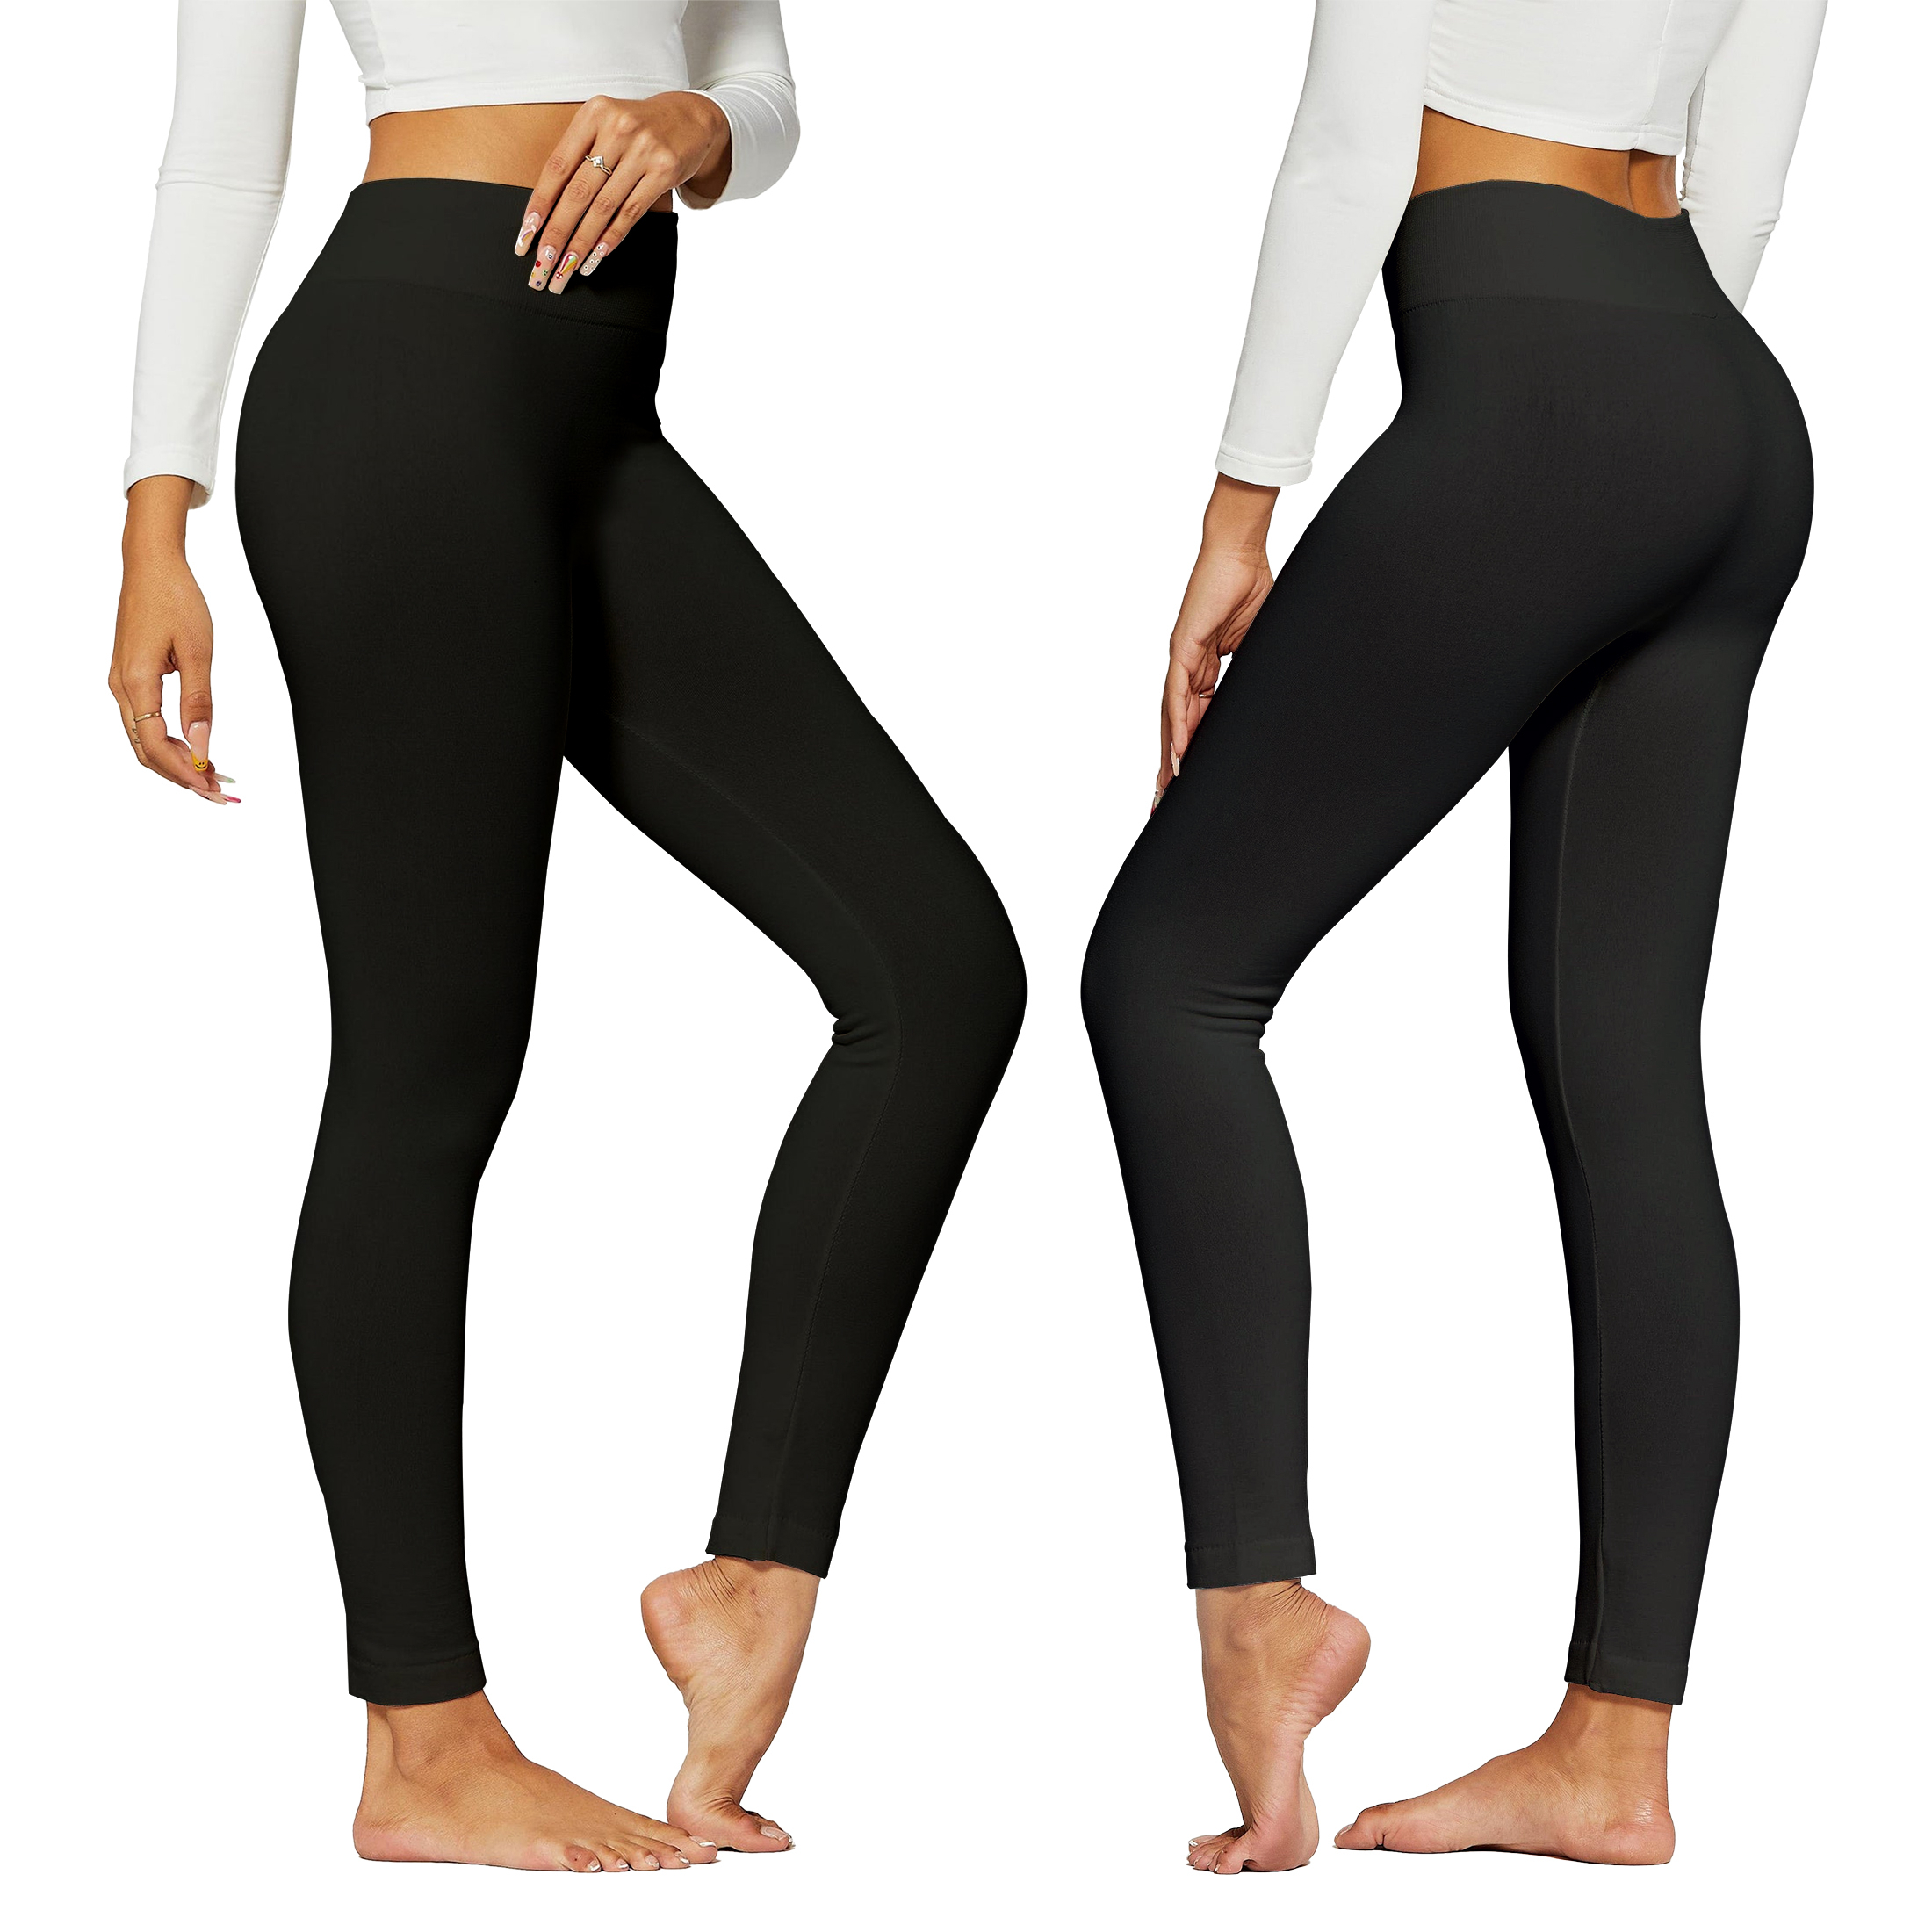 Women's Premium Quality High-Waist Fleece Lined Leggings (Plus Size Available) - Black, 3X/4X